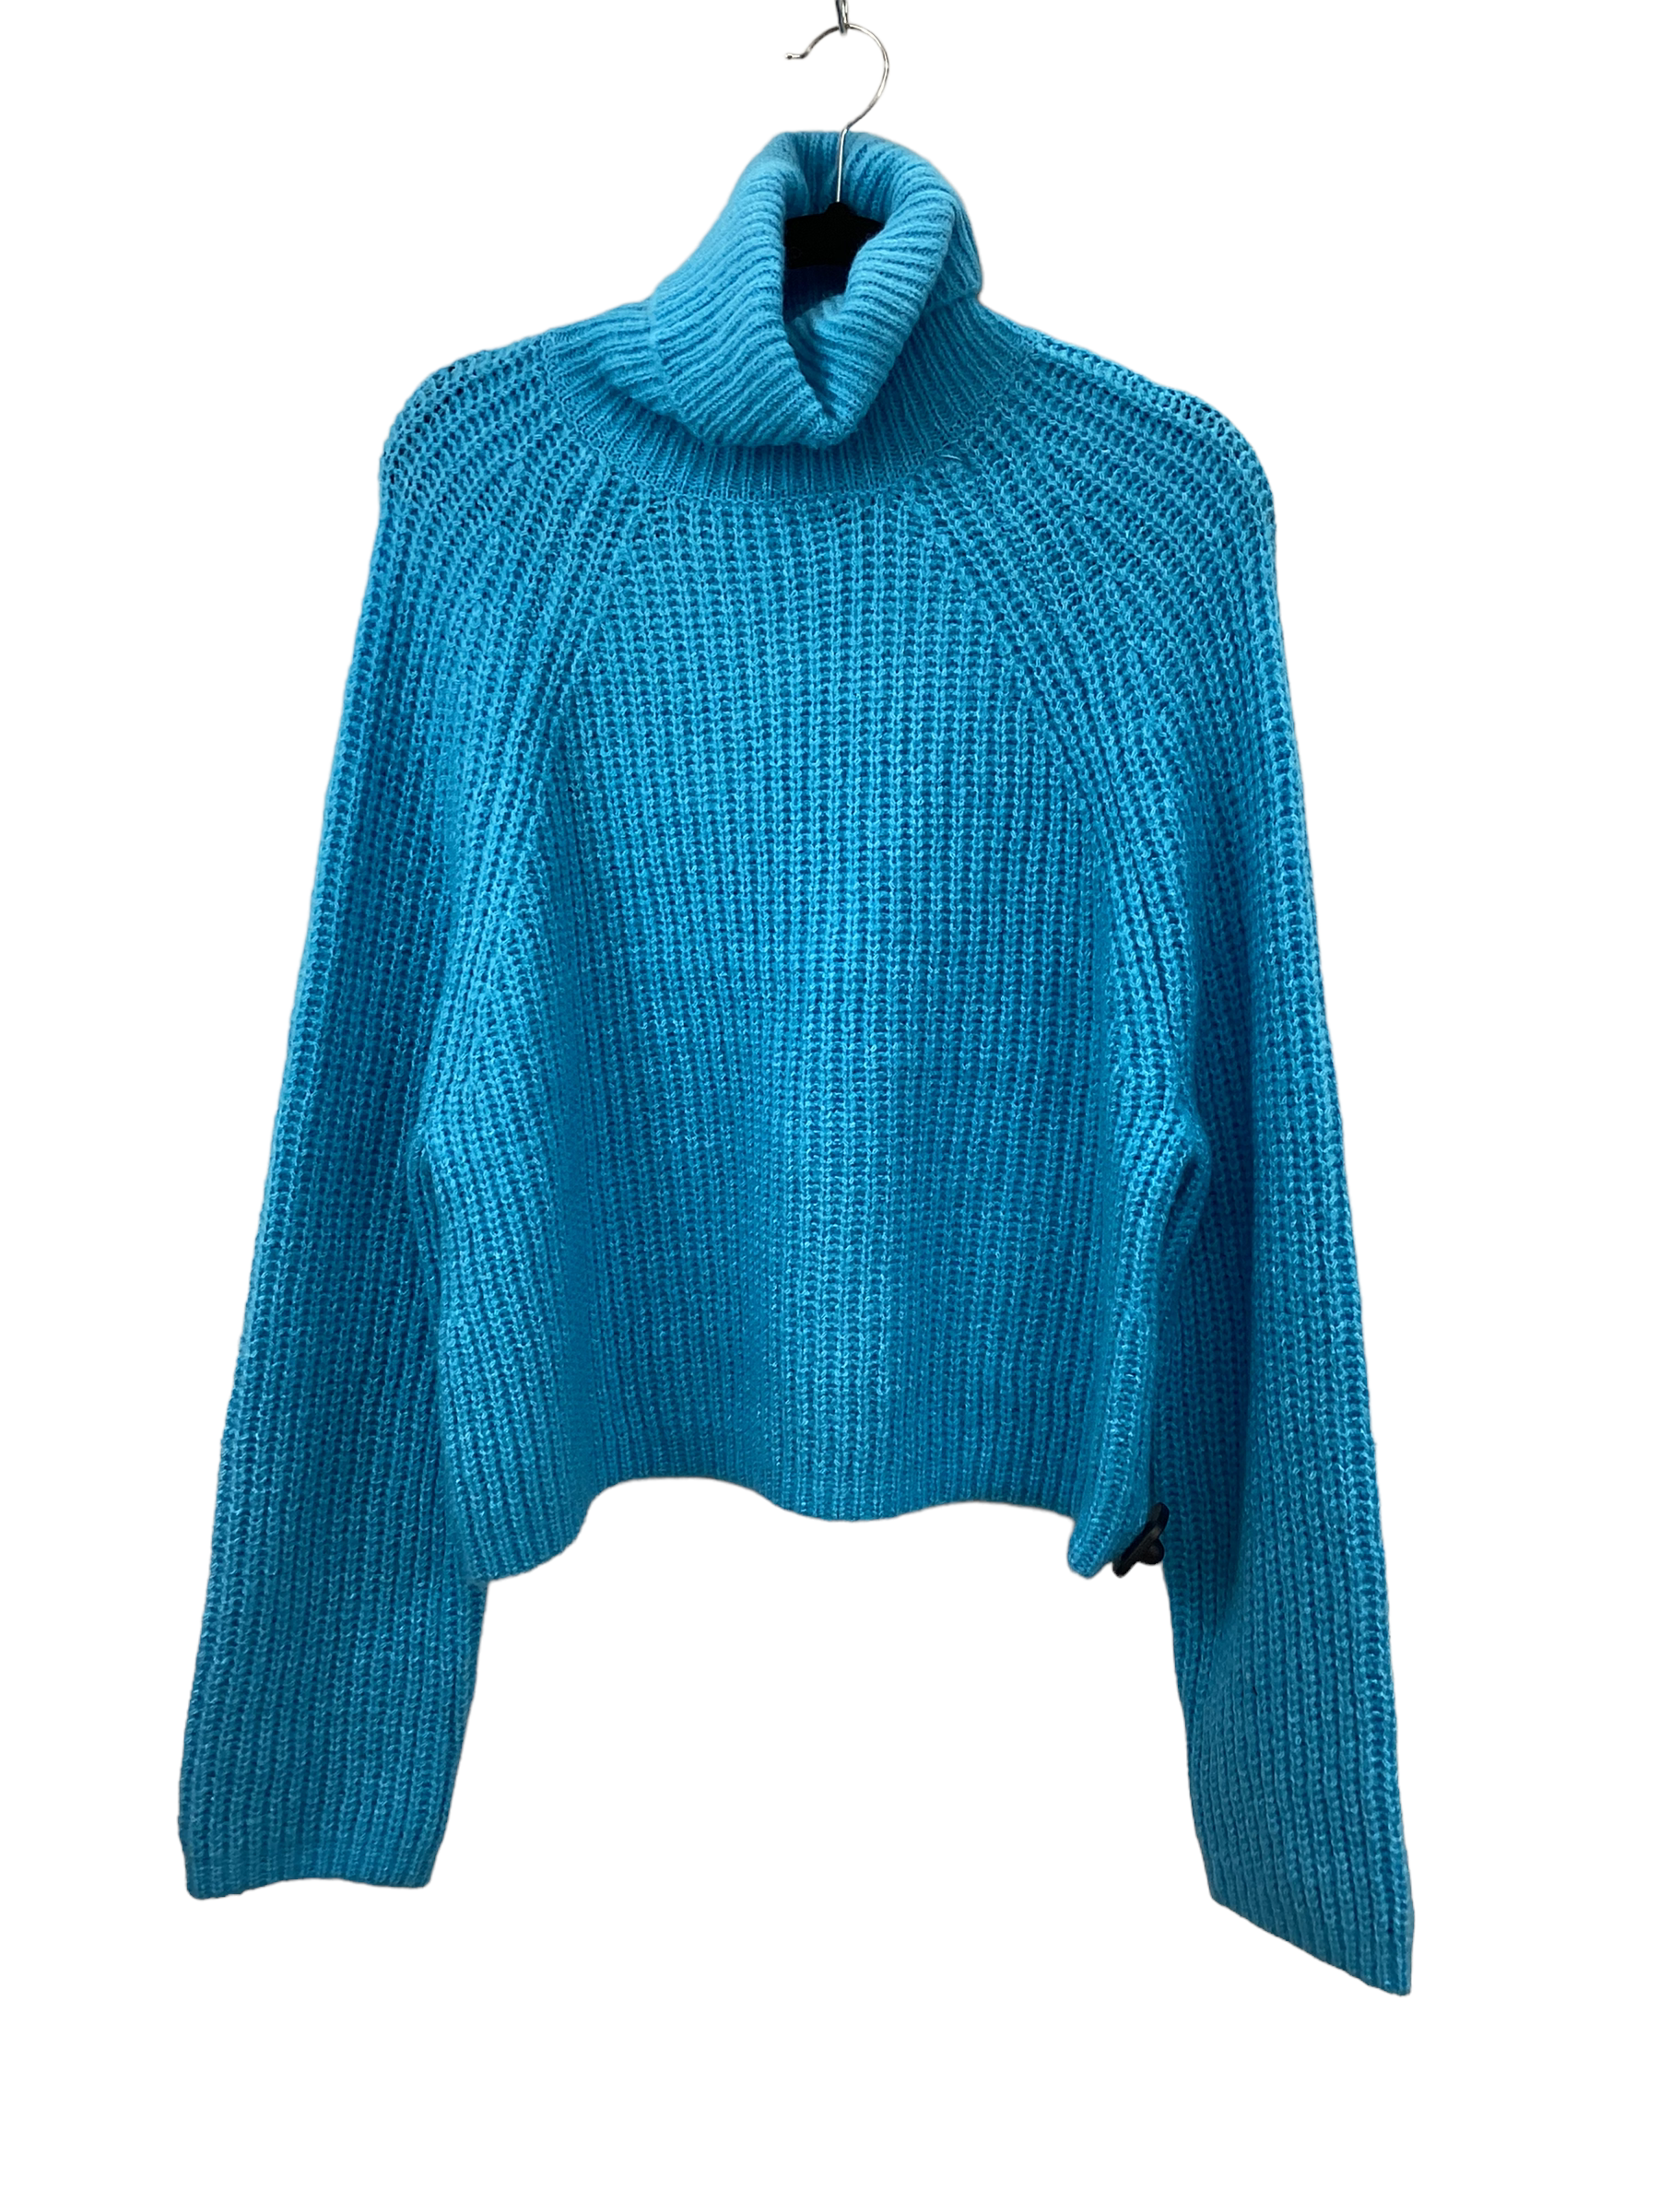 Sweater By Hyfve Size: S